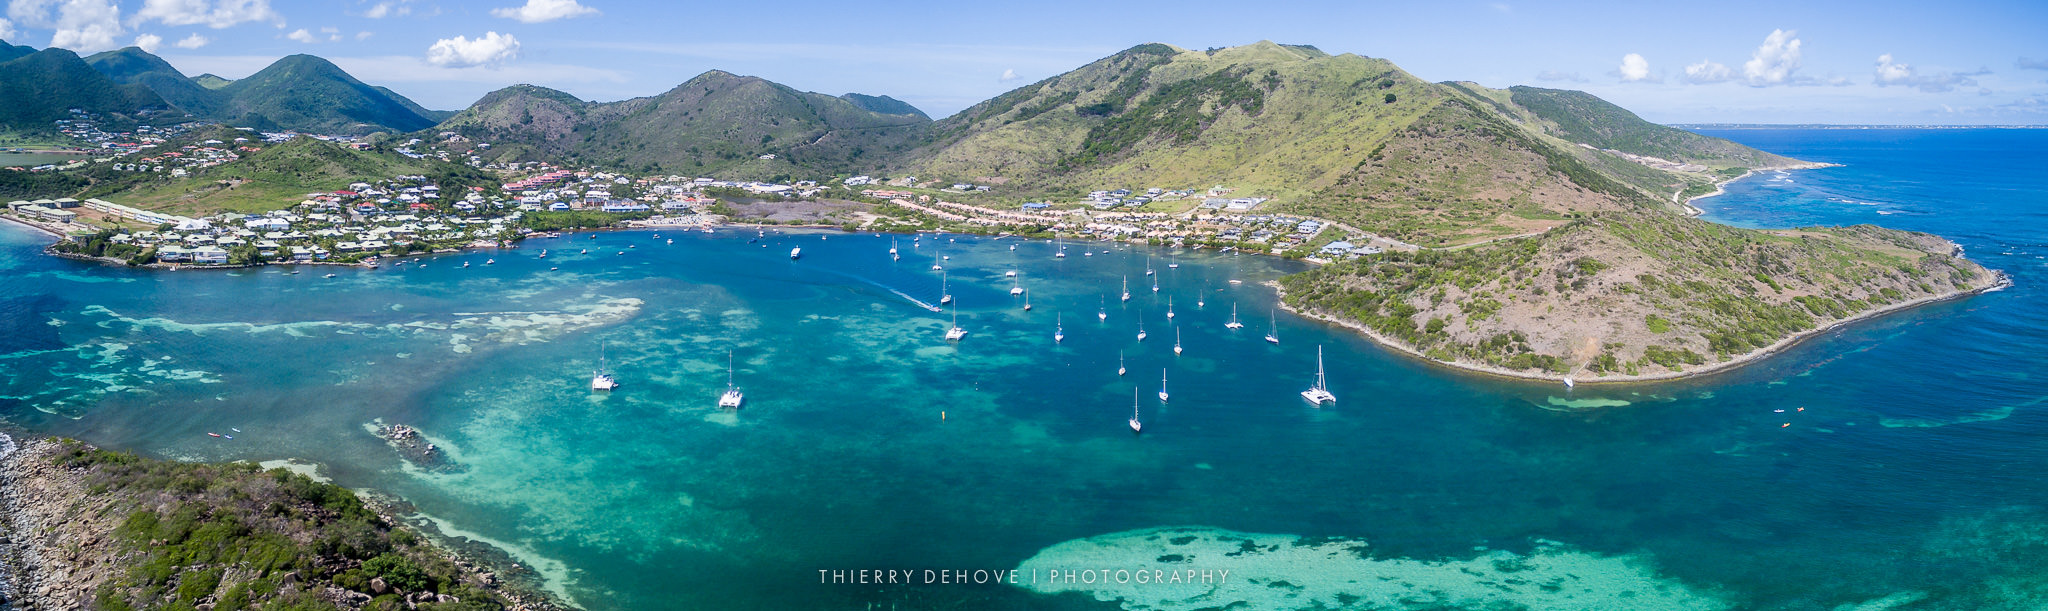 Aerial Photography Saint Martin Caribbean